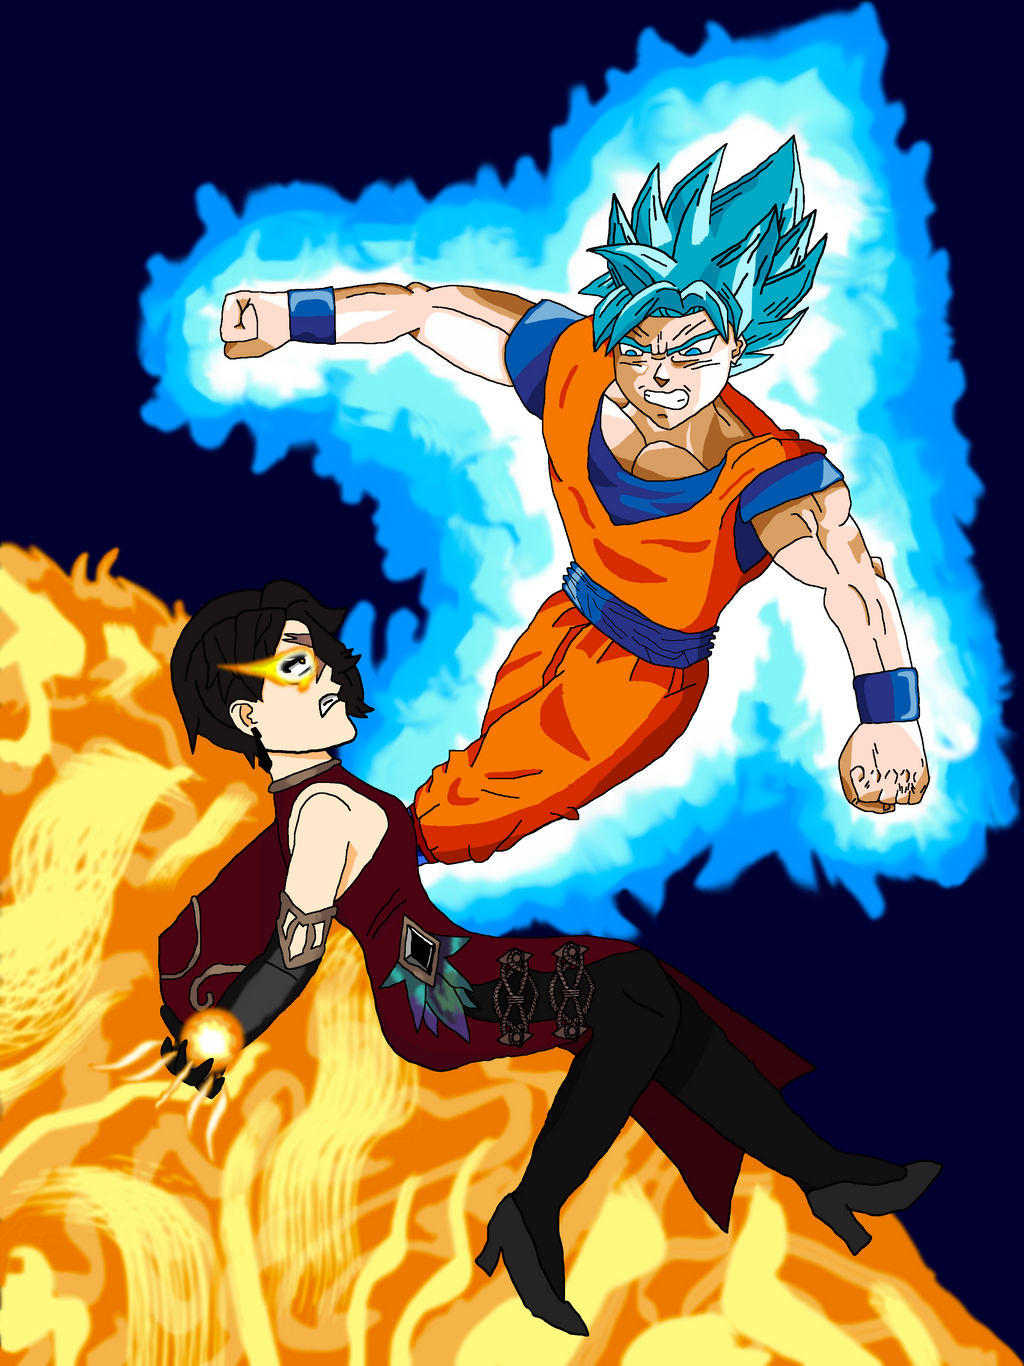 Goku vs Cinder by dragonboy1092 on DeviantArt